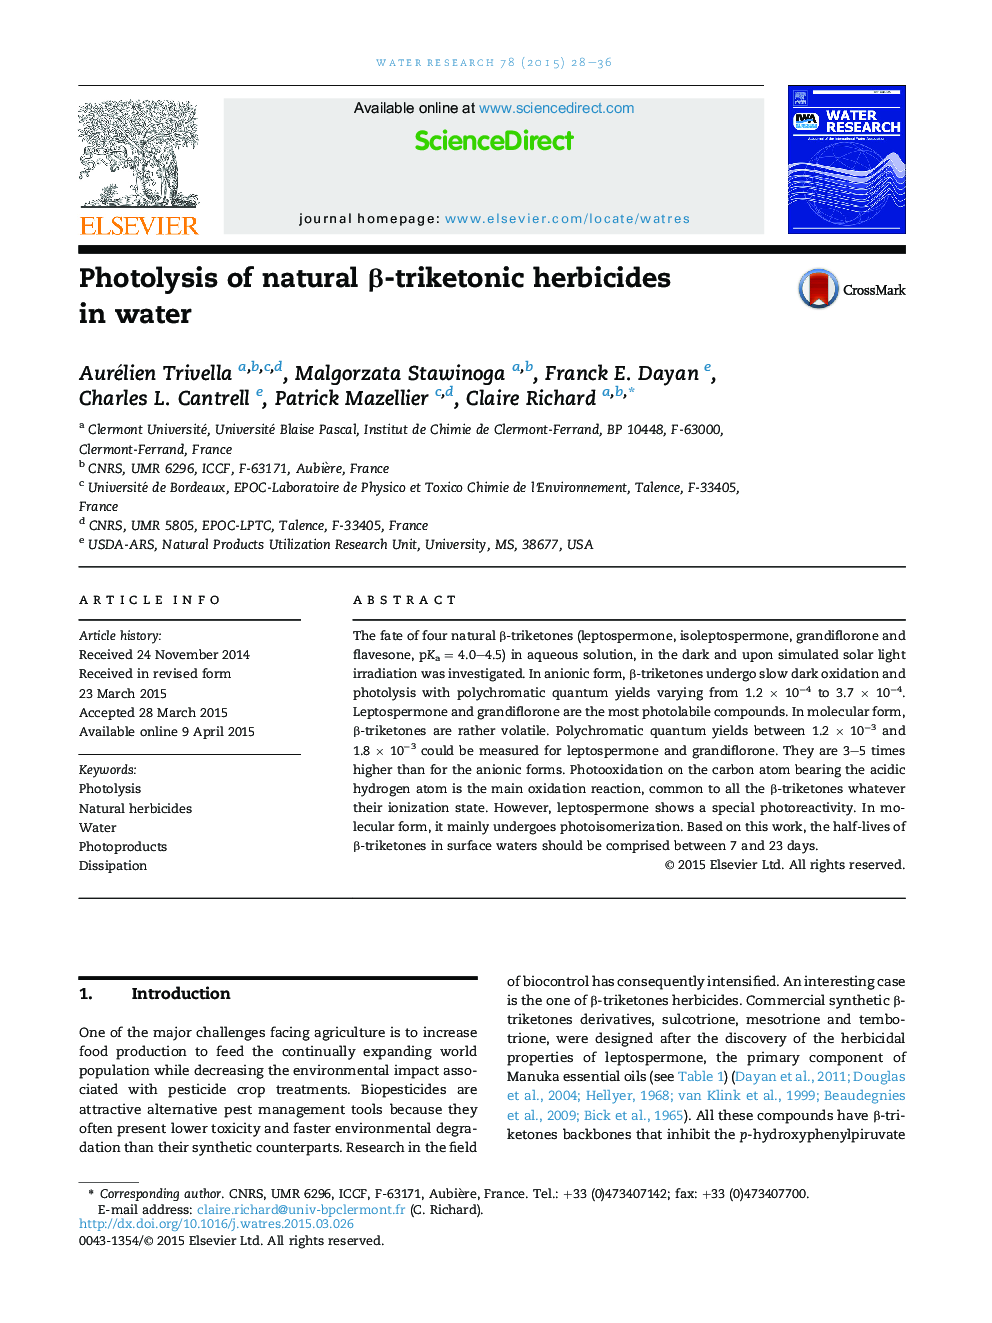 Photolysis of natural β-triketonic herbicides in water